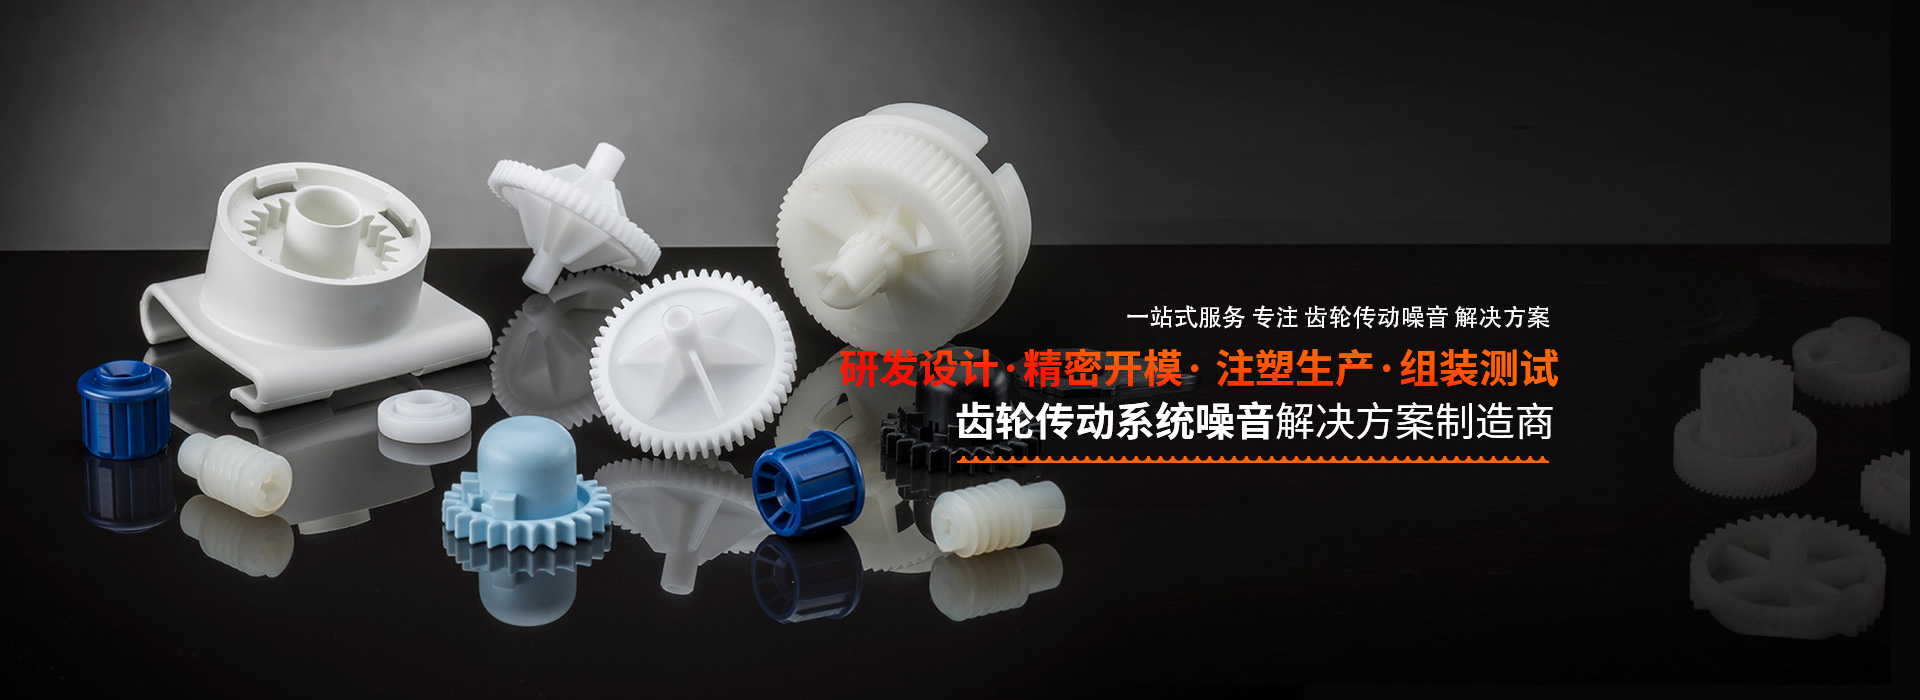 J9国际中国模具，齿轮传动系统噪音解决方案制造商